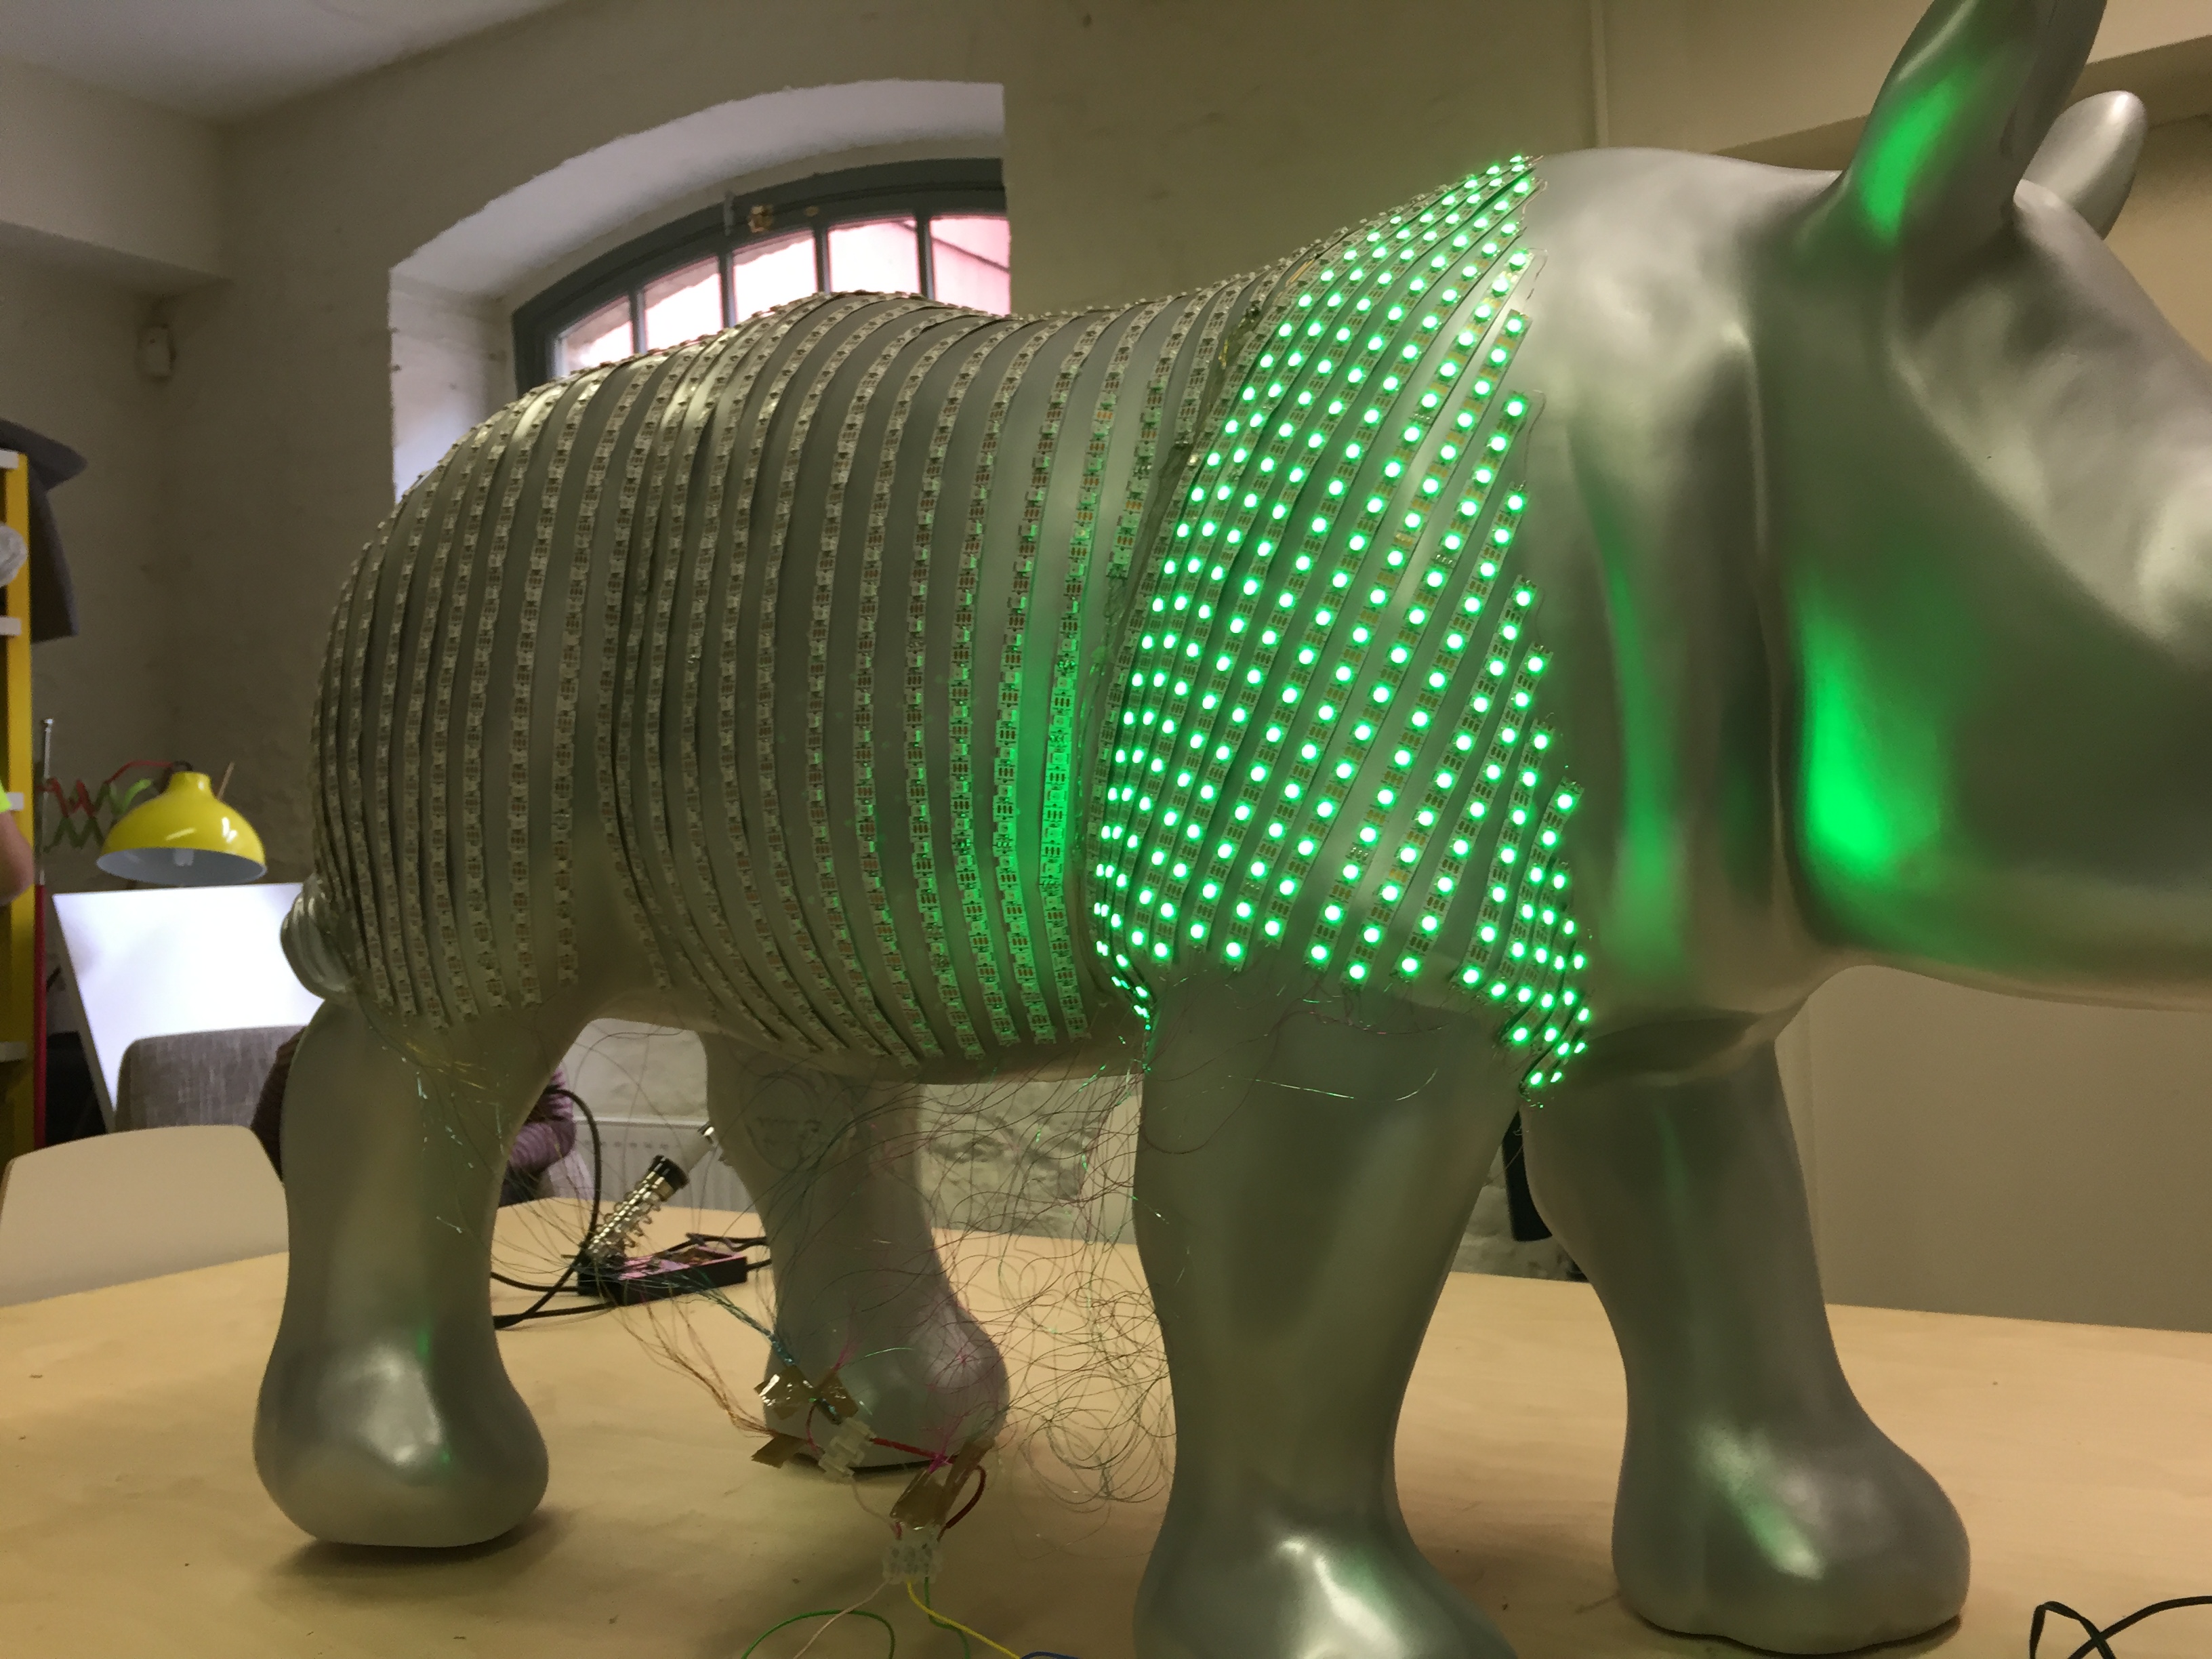 Image2: Testing LEDs on the body of the rhino